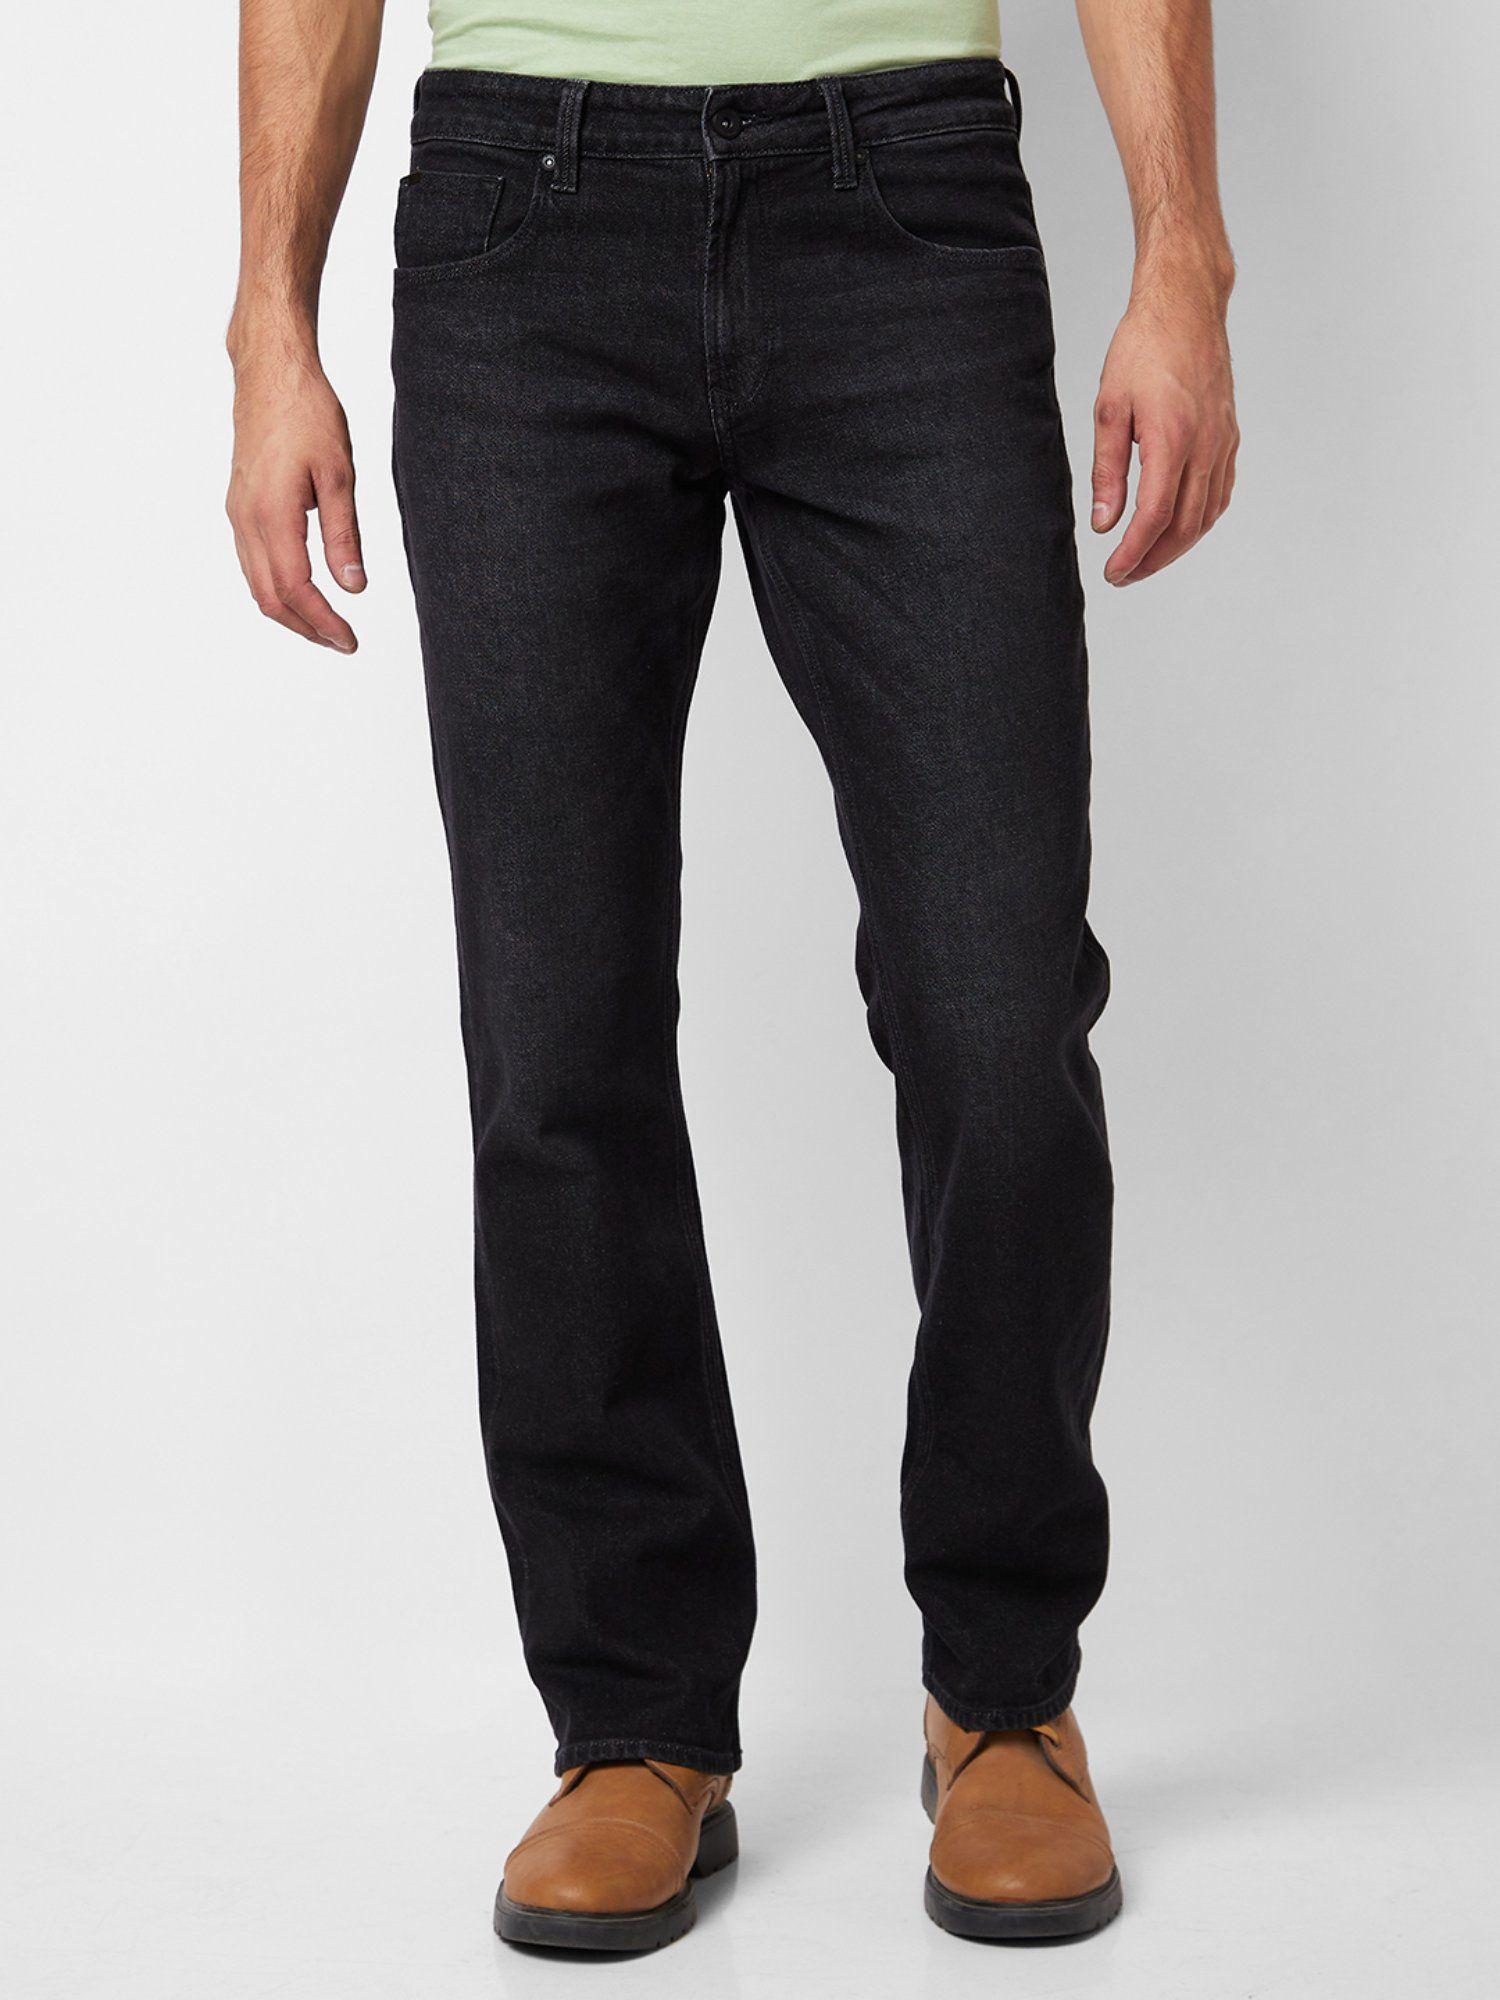 Mid Rise Bootcut Fit Black Jeans for Men